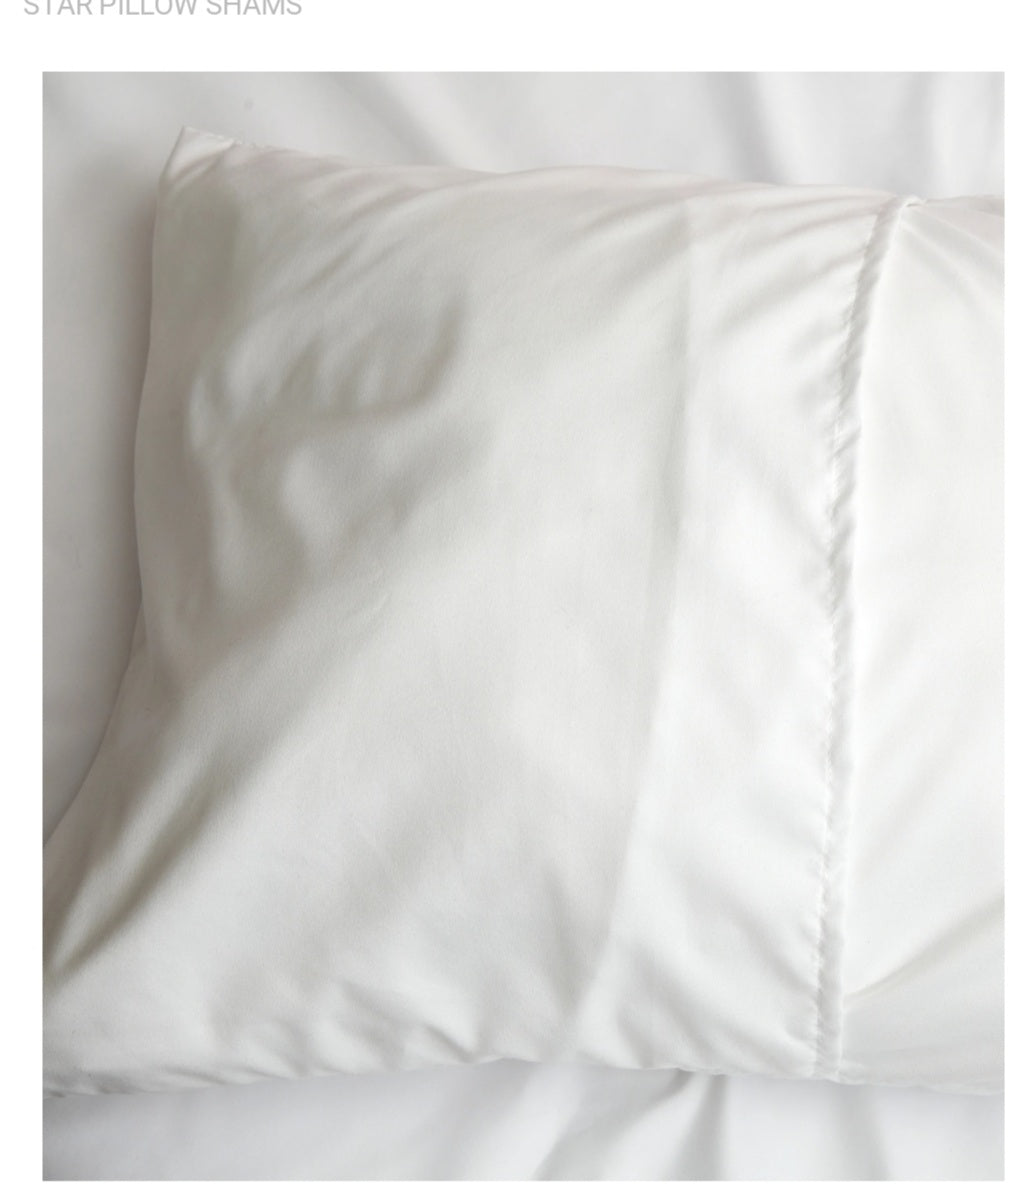 Ruidoso Pillow Shams - bedding, blanket, case, cases, cow, cows, decor, highland, home, pillow, ranch, western -  - Baha Ranch Western Wear